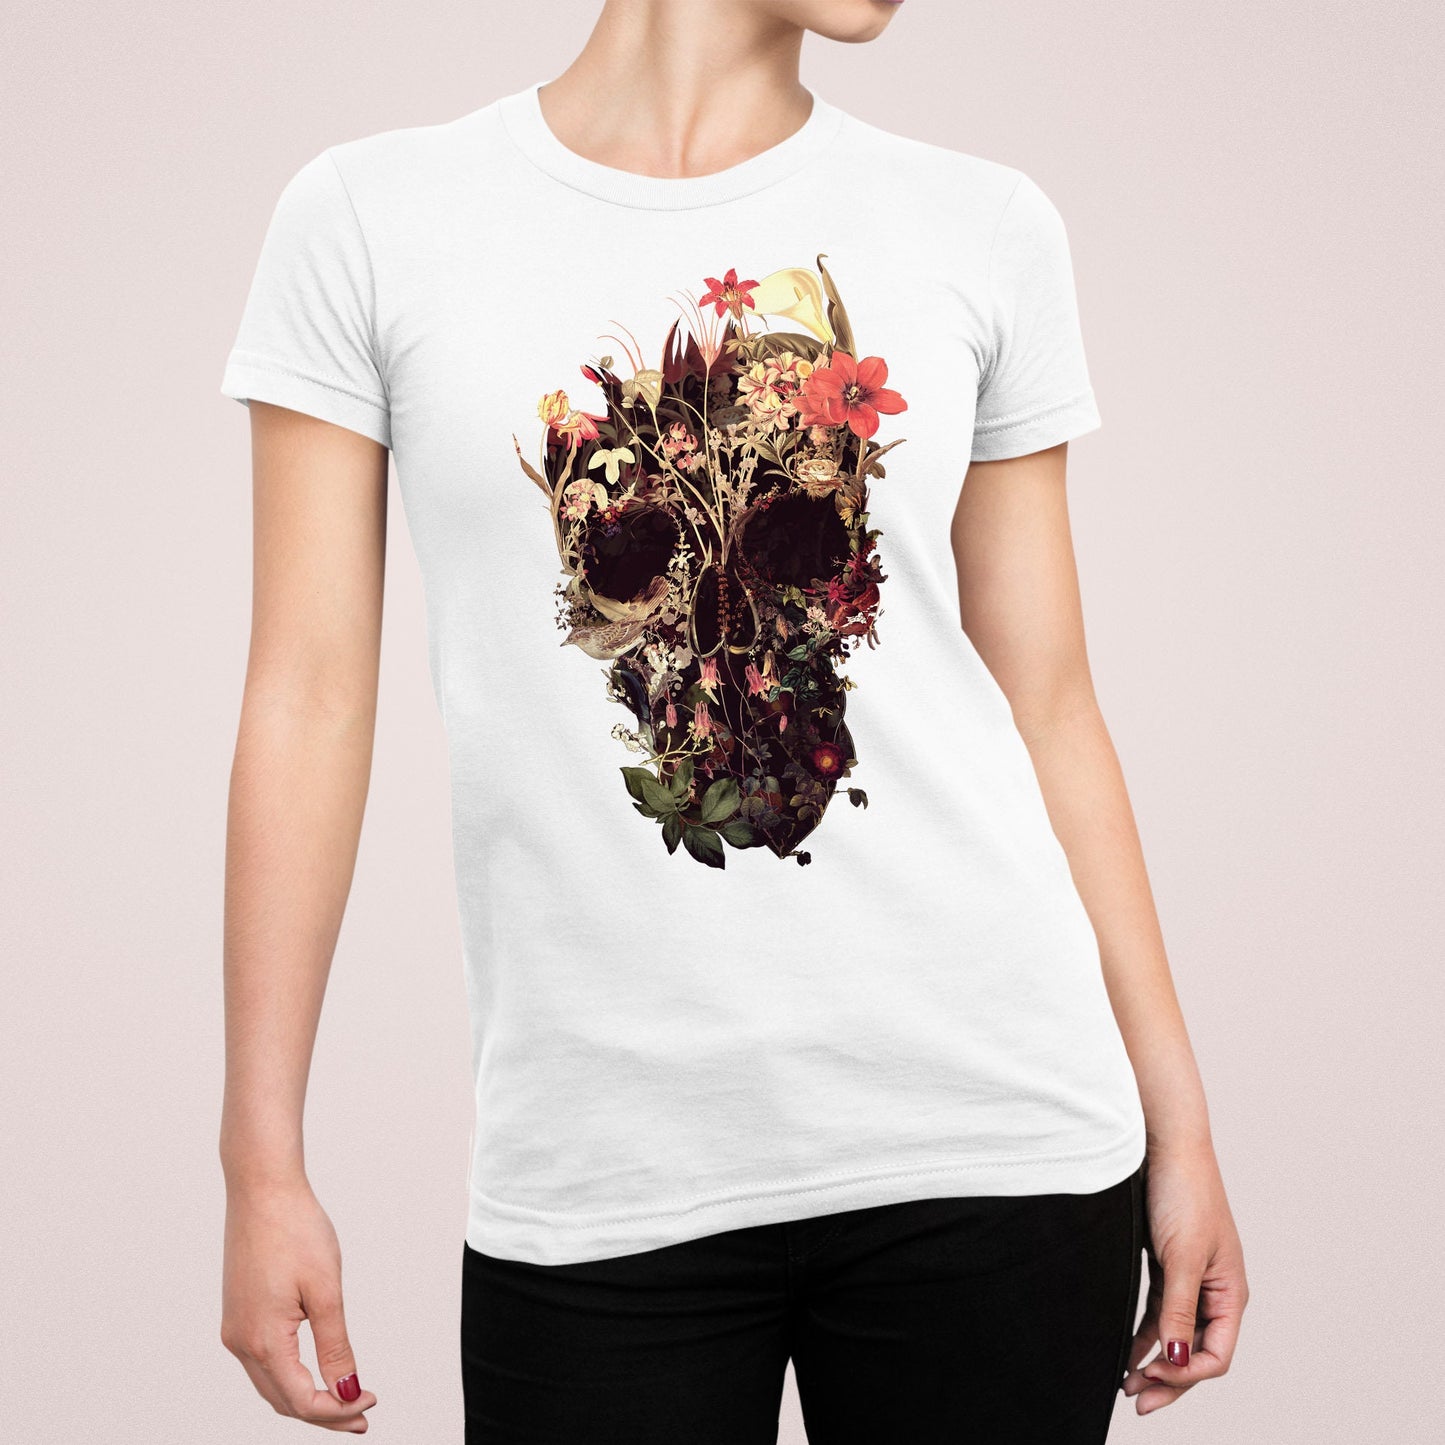 Bloom Skull Womens T-Shirt, Sugar Skull Art Tshirt Gift For Her, Floral Skull Print Boho Graphic Tee, Flower Skull Bella Canvas T-Shirt